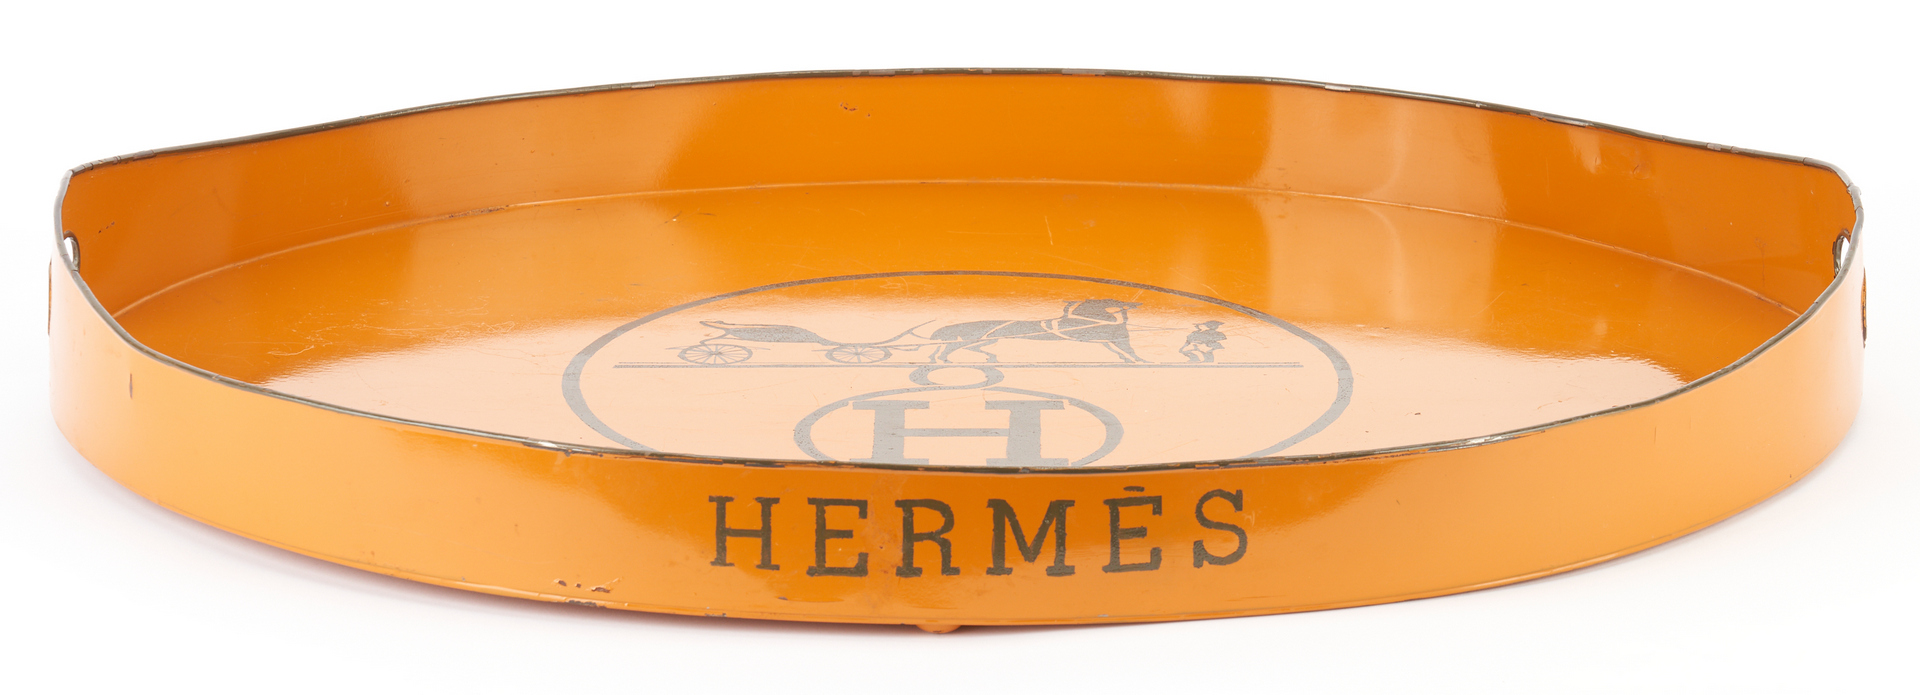 Lot 31: Hermes Orange Tole Logo Tray